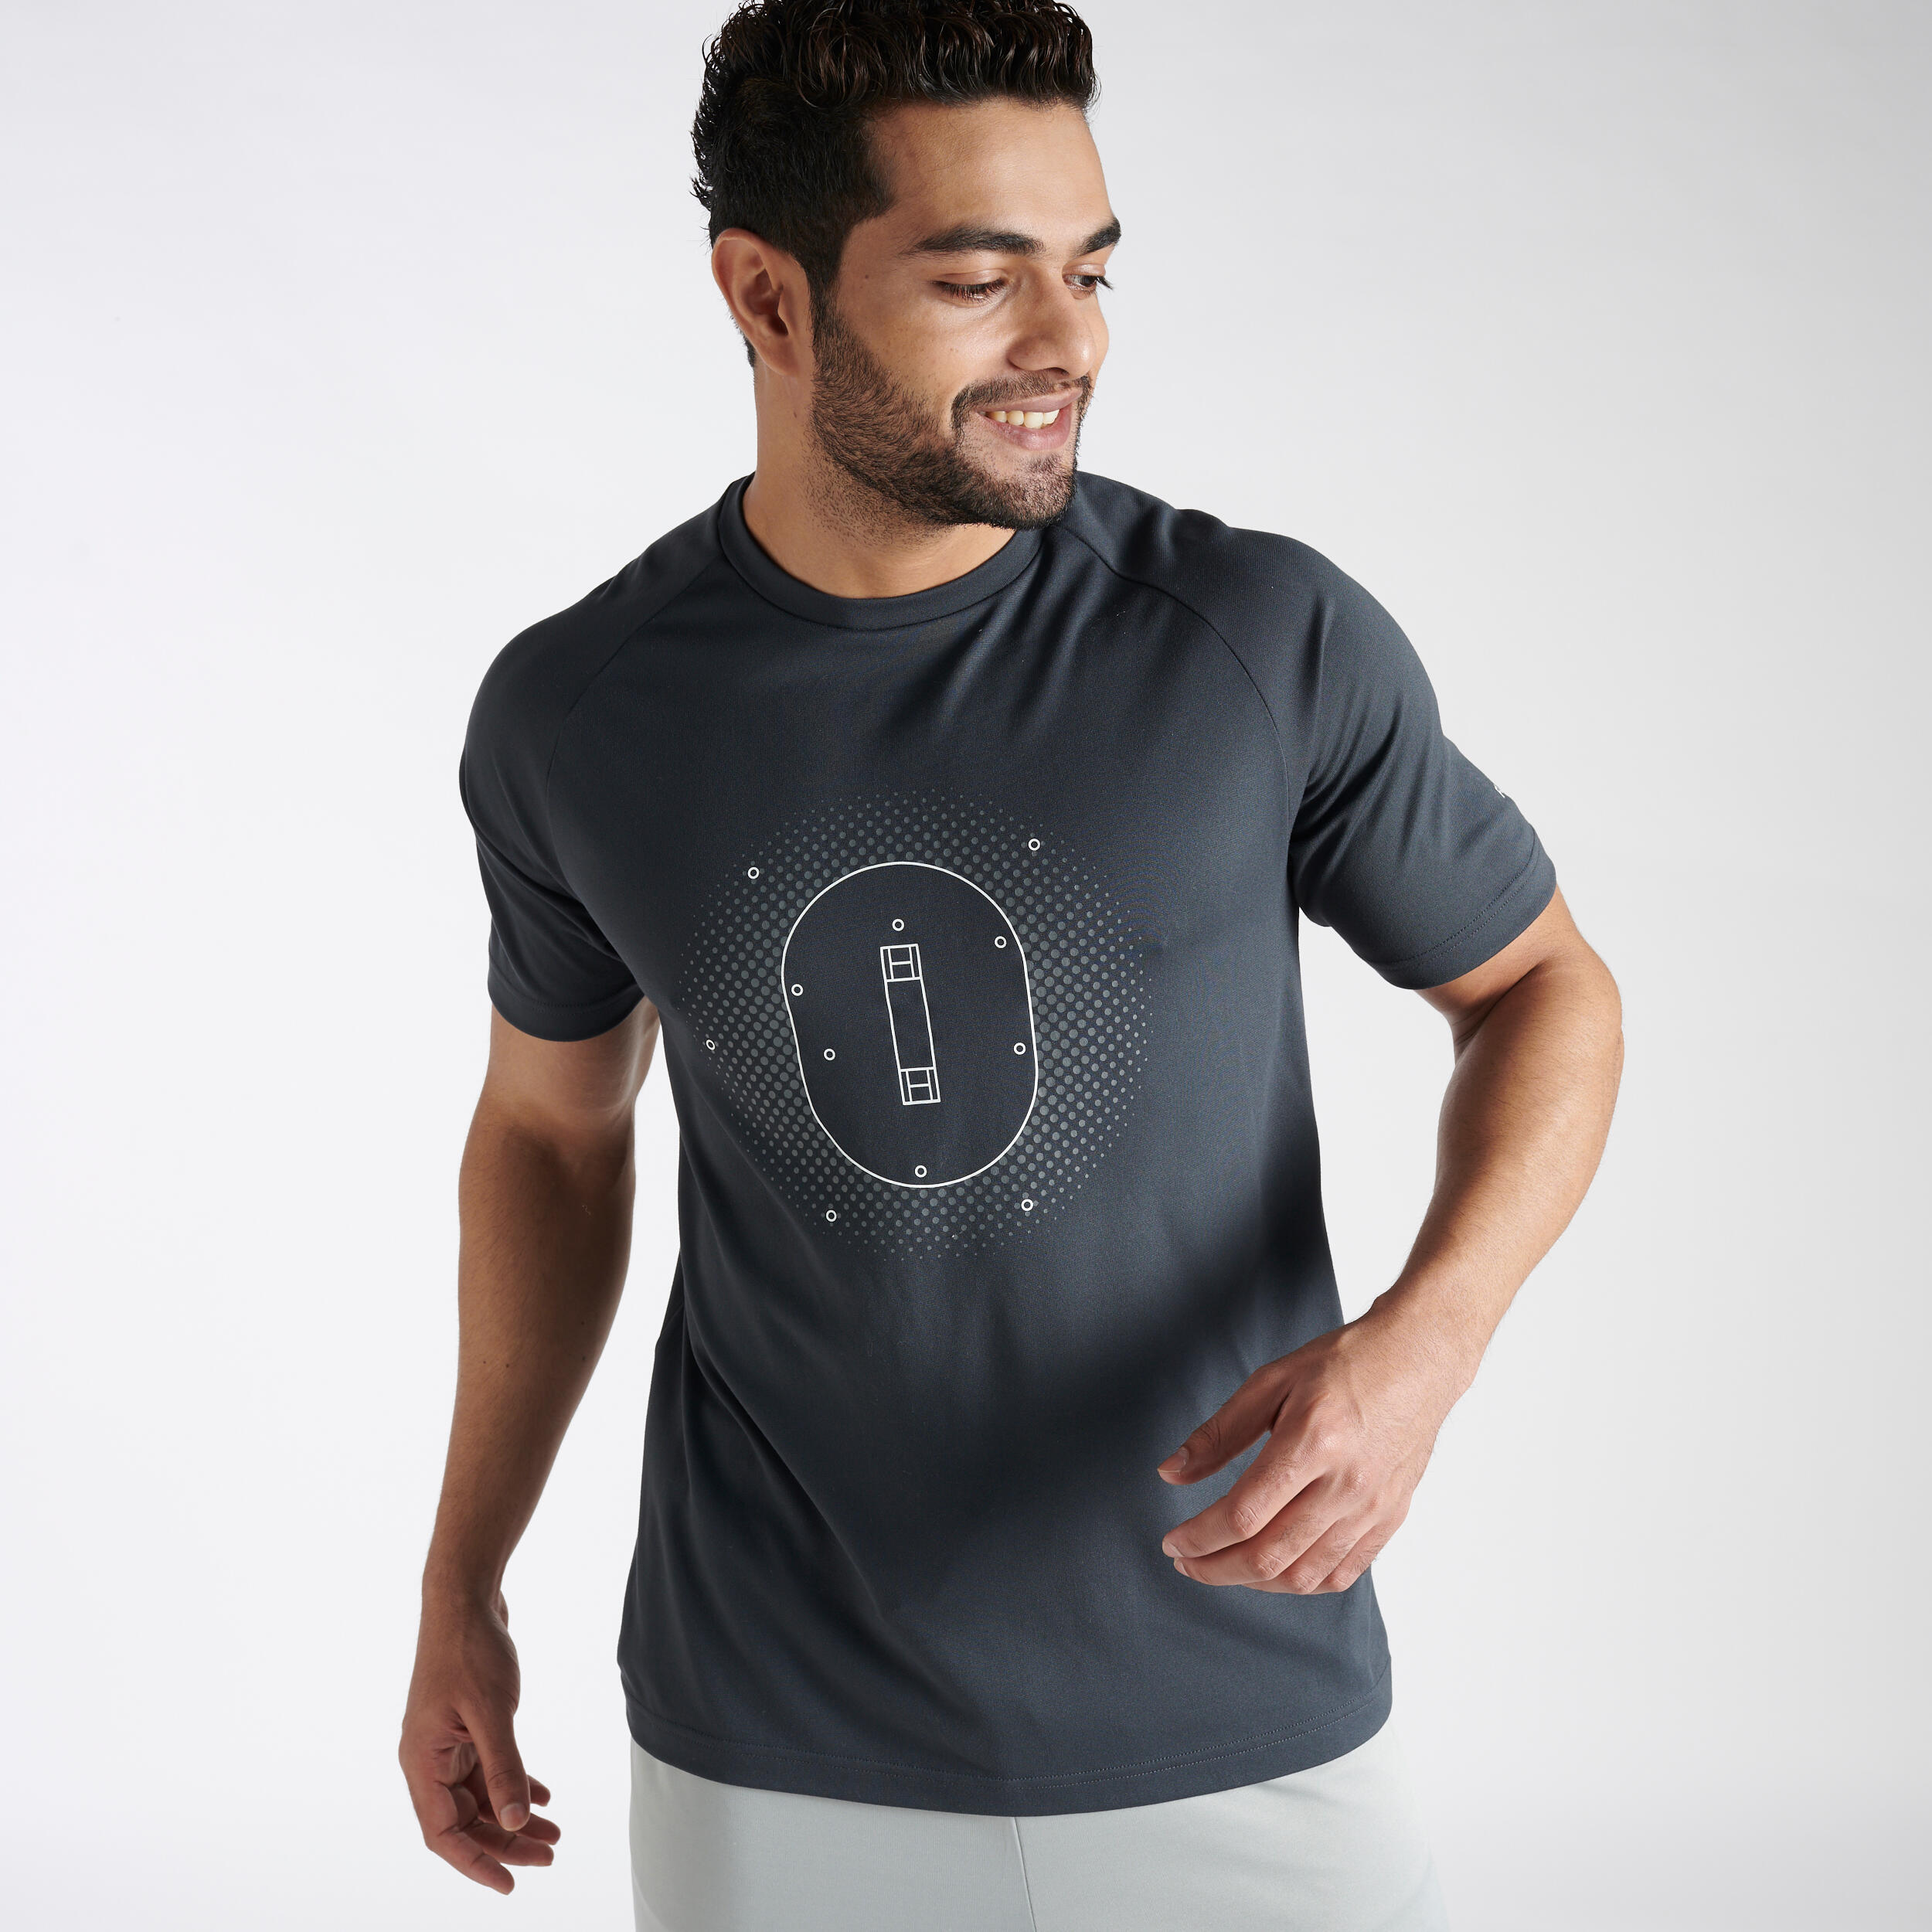 Buy Cricket T Shirt Online  Decathlon